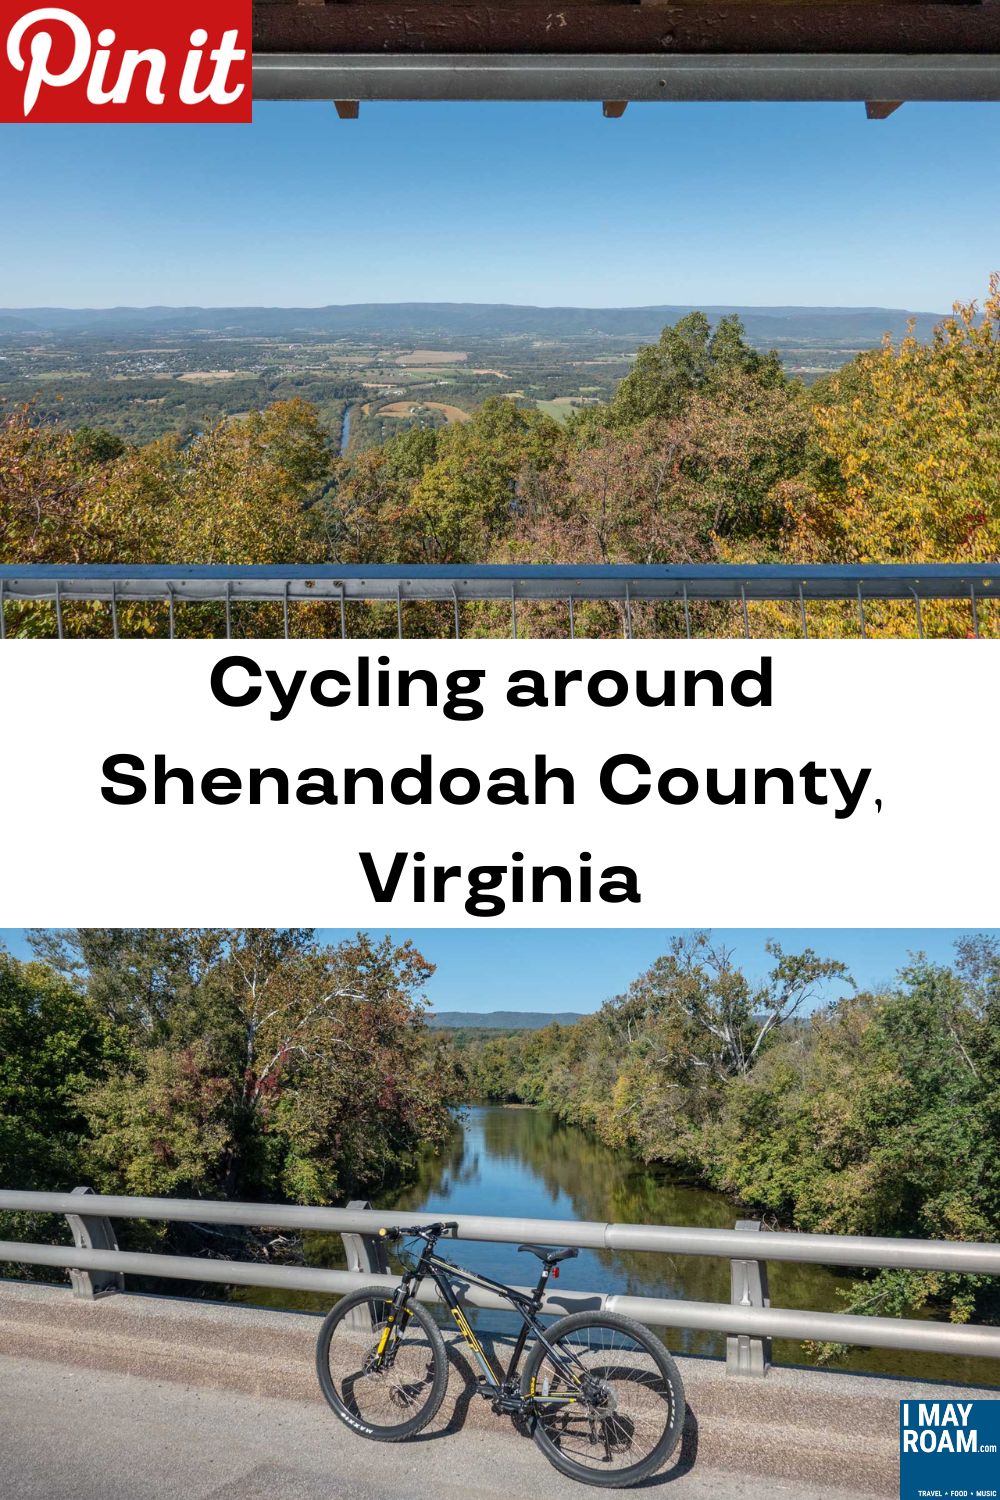 Pinterest Cycling around Shenandoah County Virginia